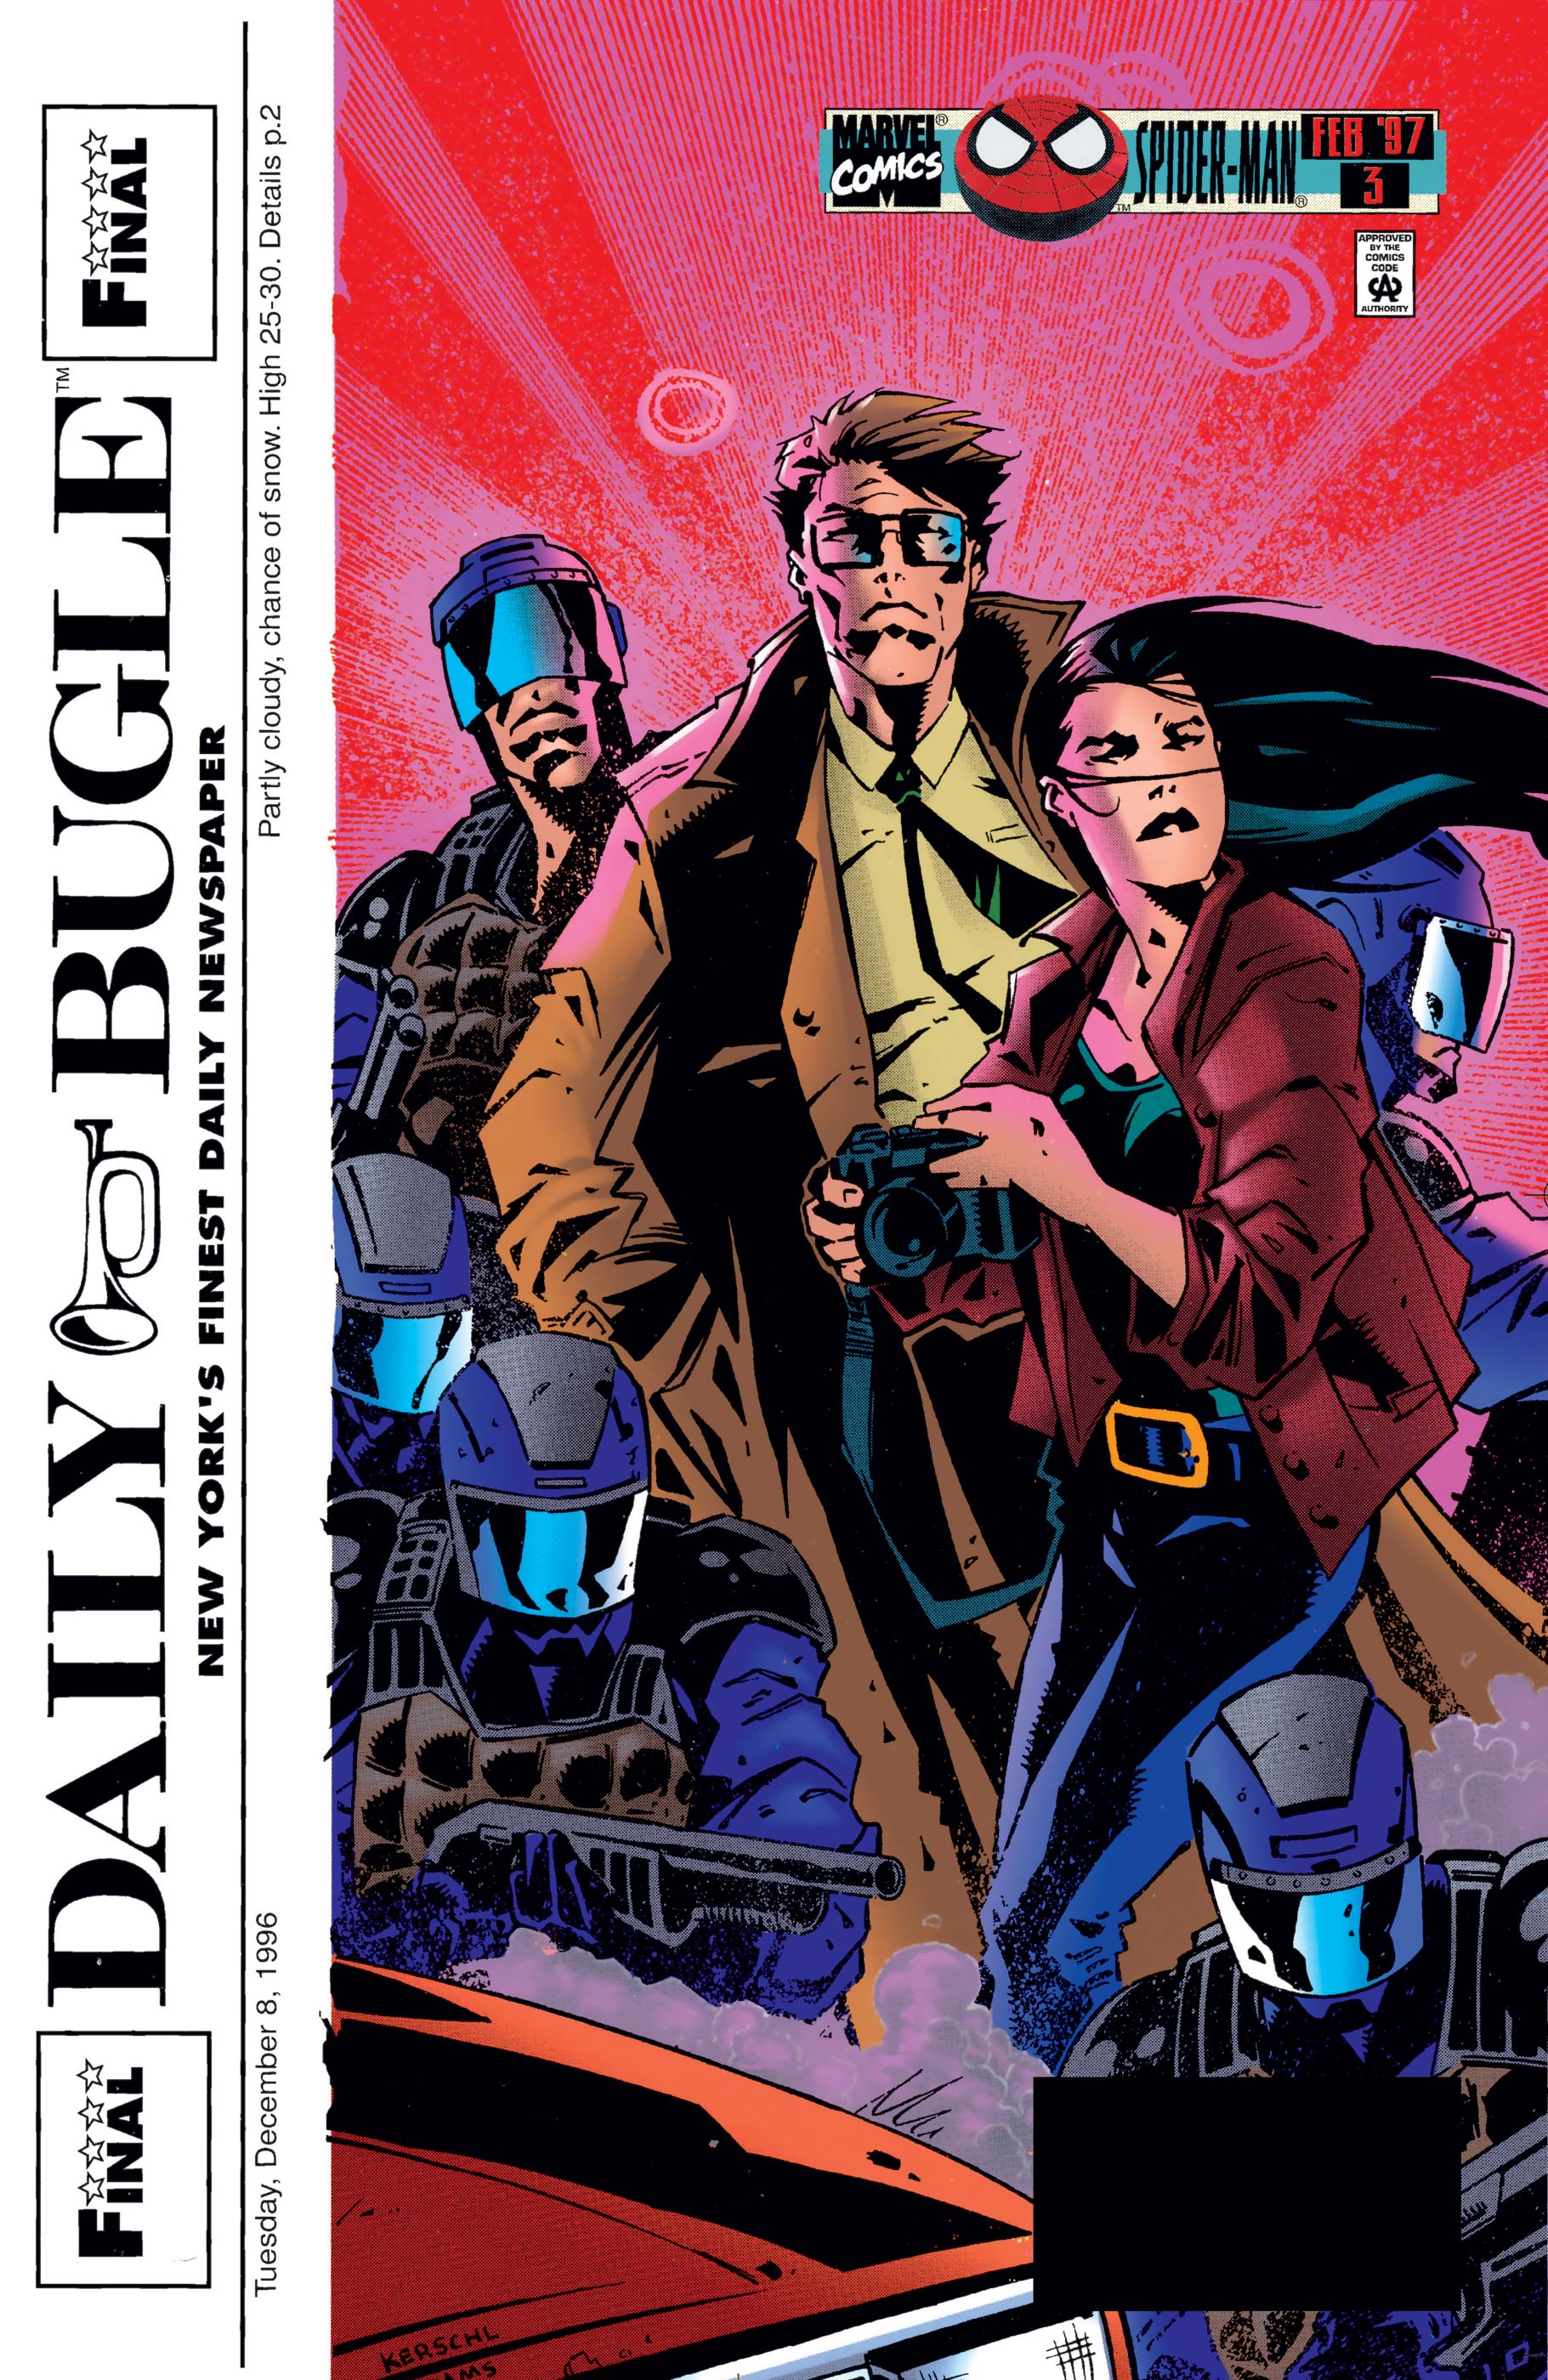 Daily Bugle (1996) #3